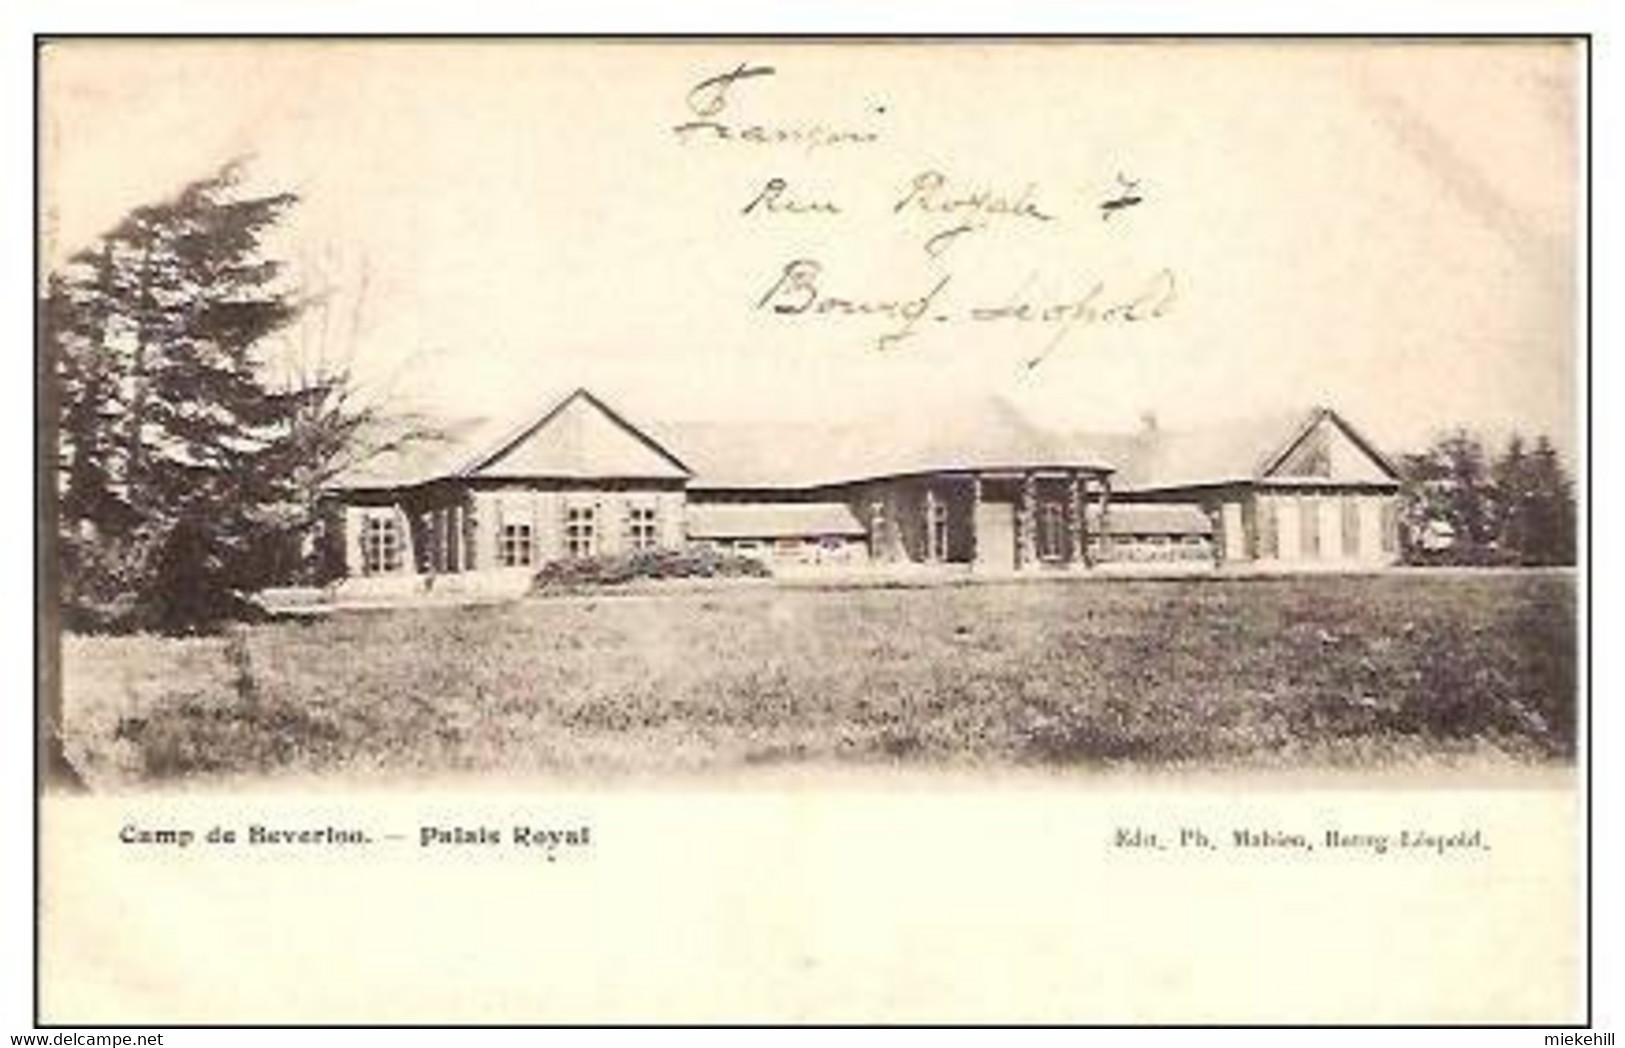 CAMP  MILITAIRE DE BEVERLOO-PALAIS  ROYAL- - Leopoldsburg (Beverloo Camp)